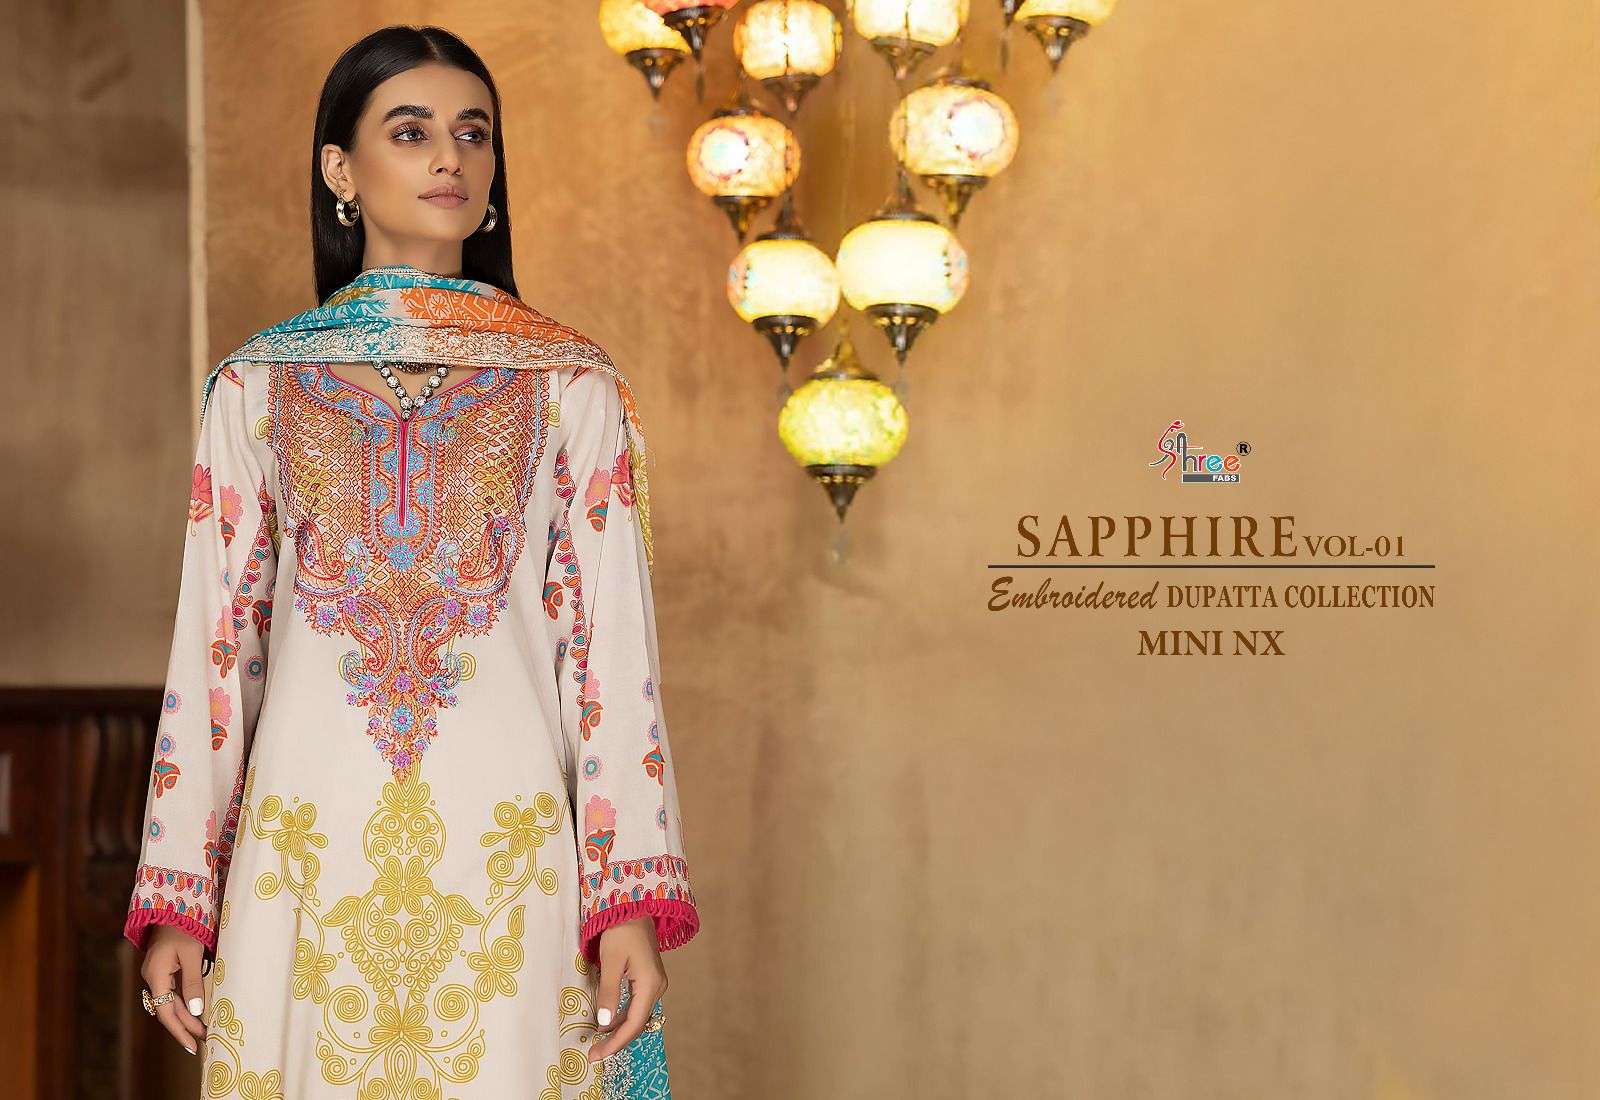 shree fab sapphire vol-1 mini nx 2555-2558 series pakistani salwar suits catalogue collection 2023